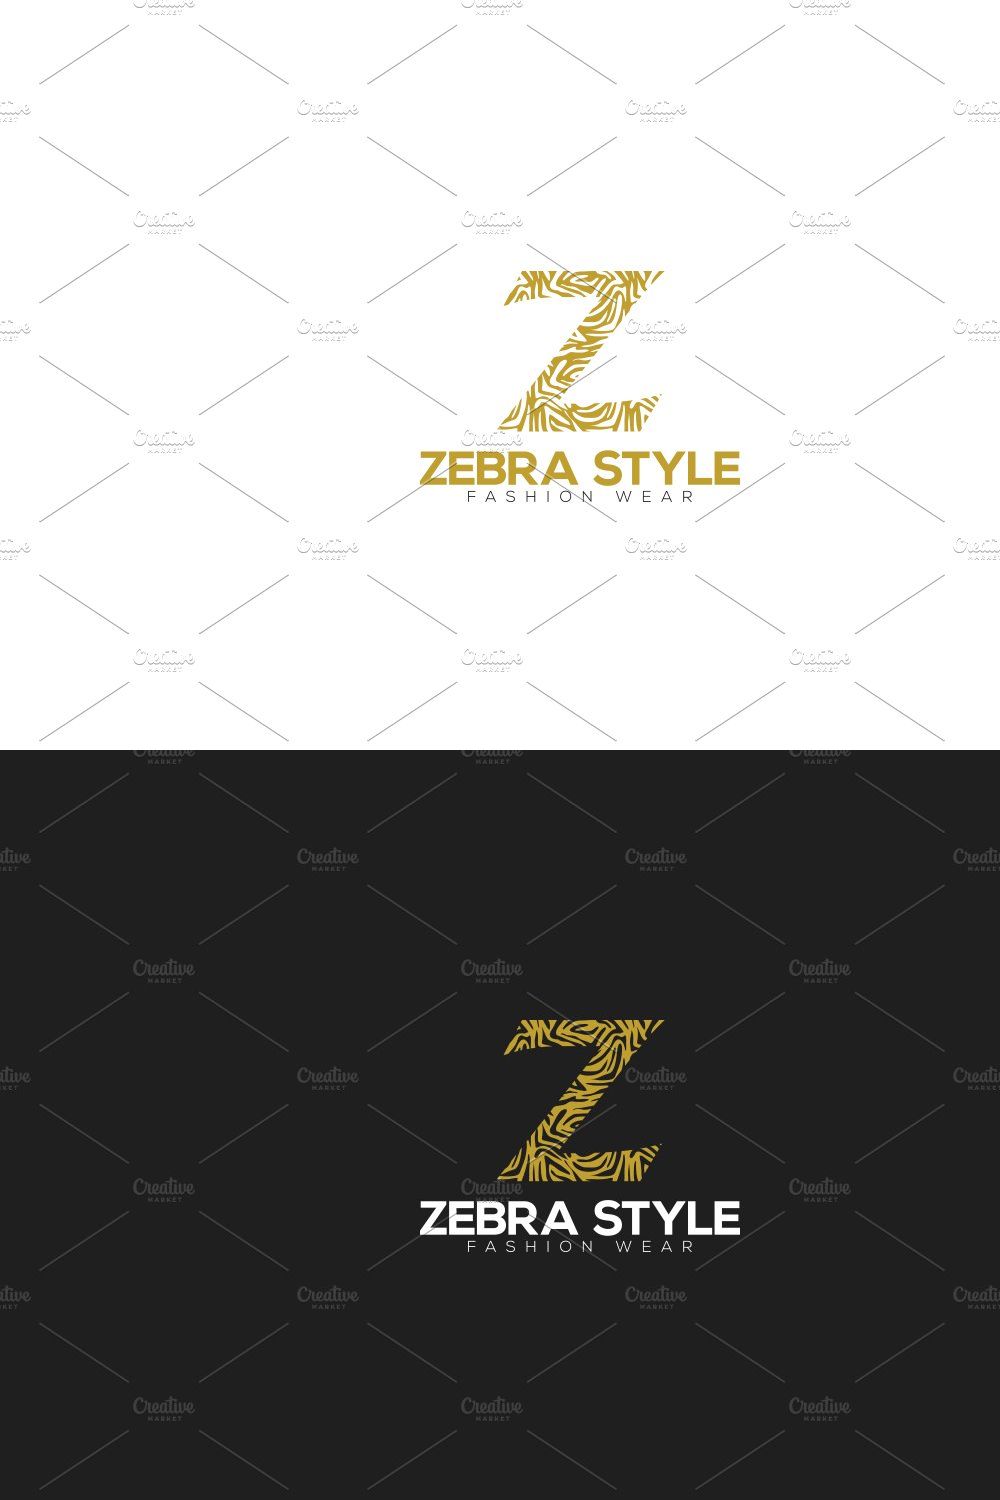 Zebra Style Logo pinterest preview image.